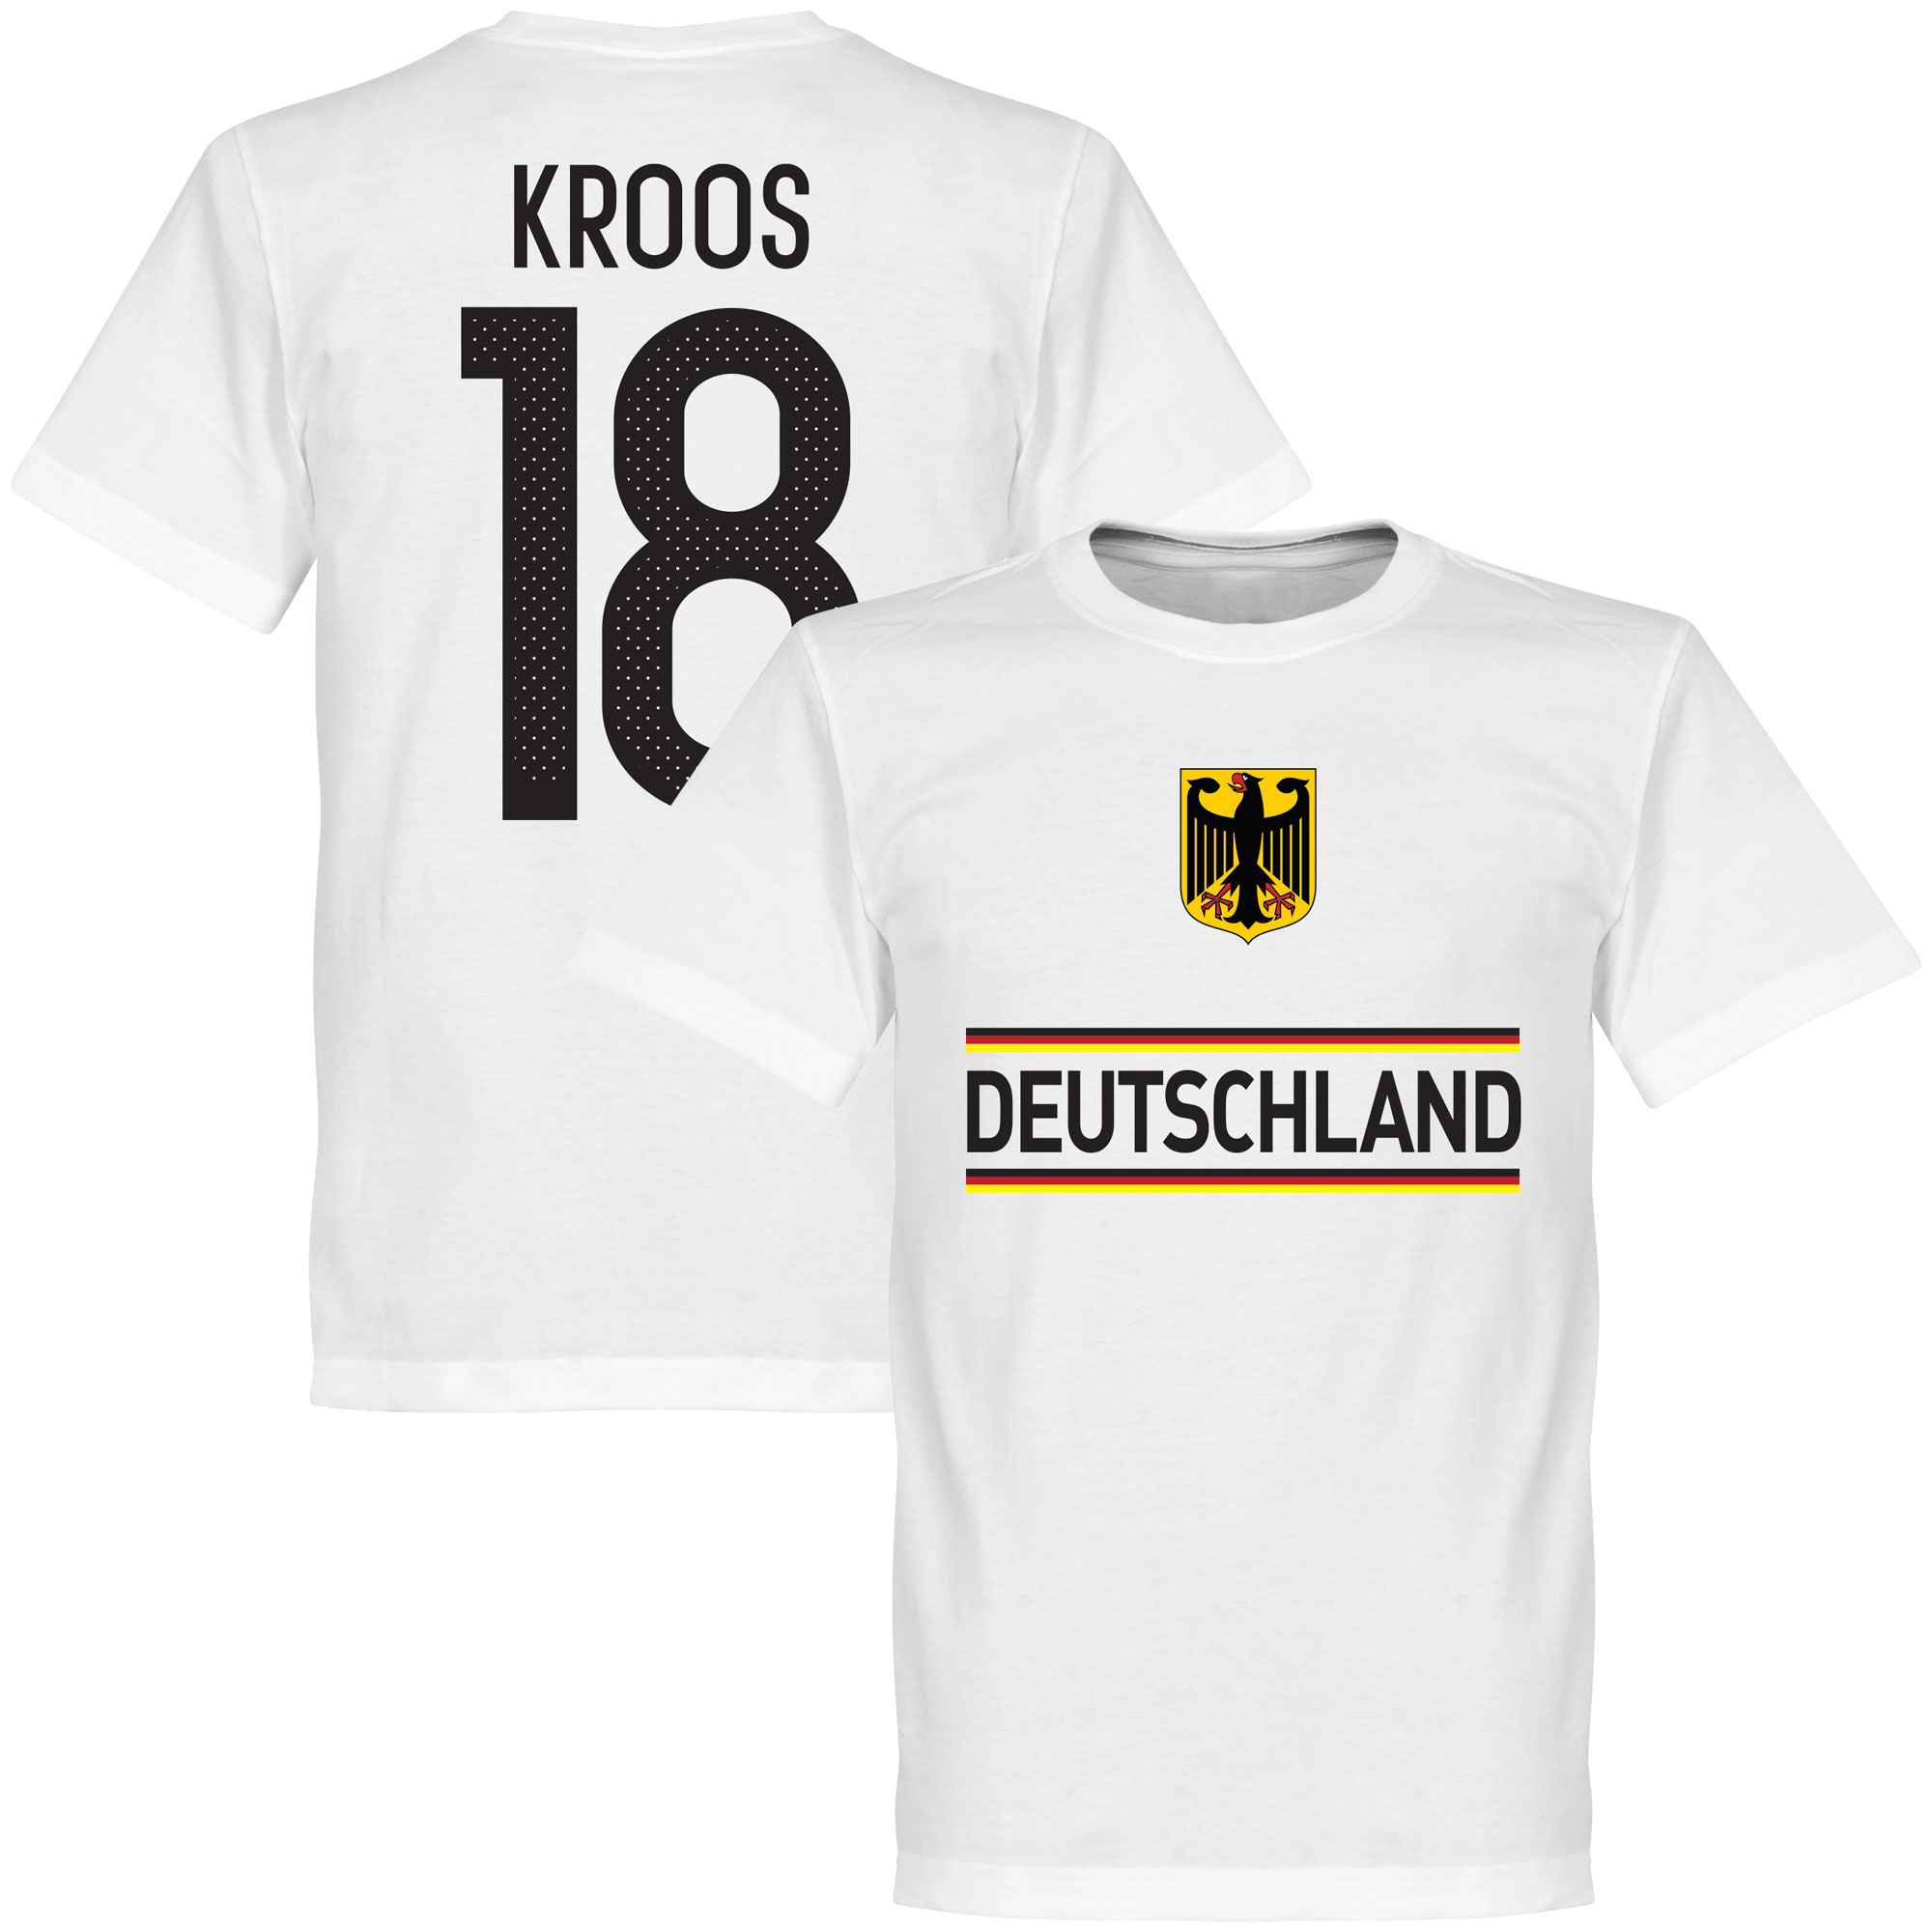 Duitsland Kroos Team T-Shirt S